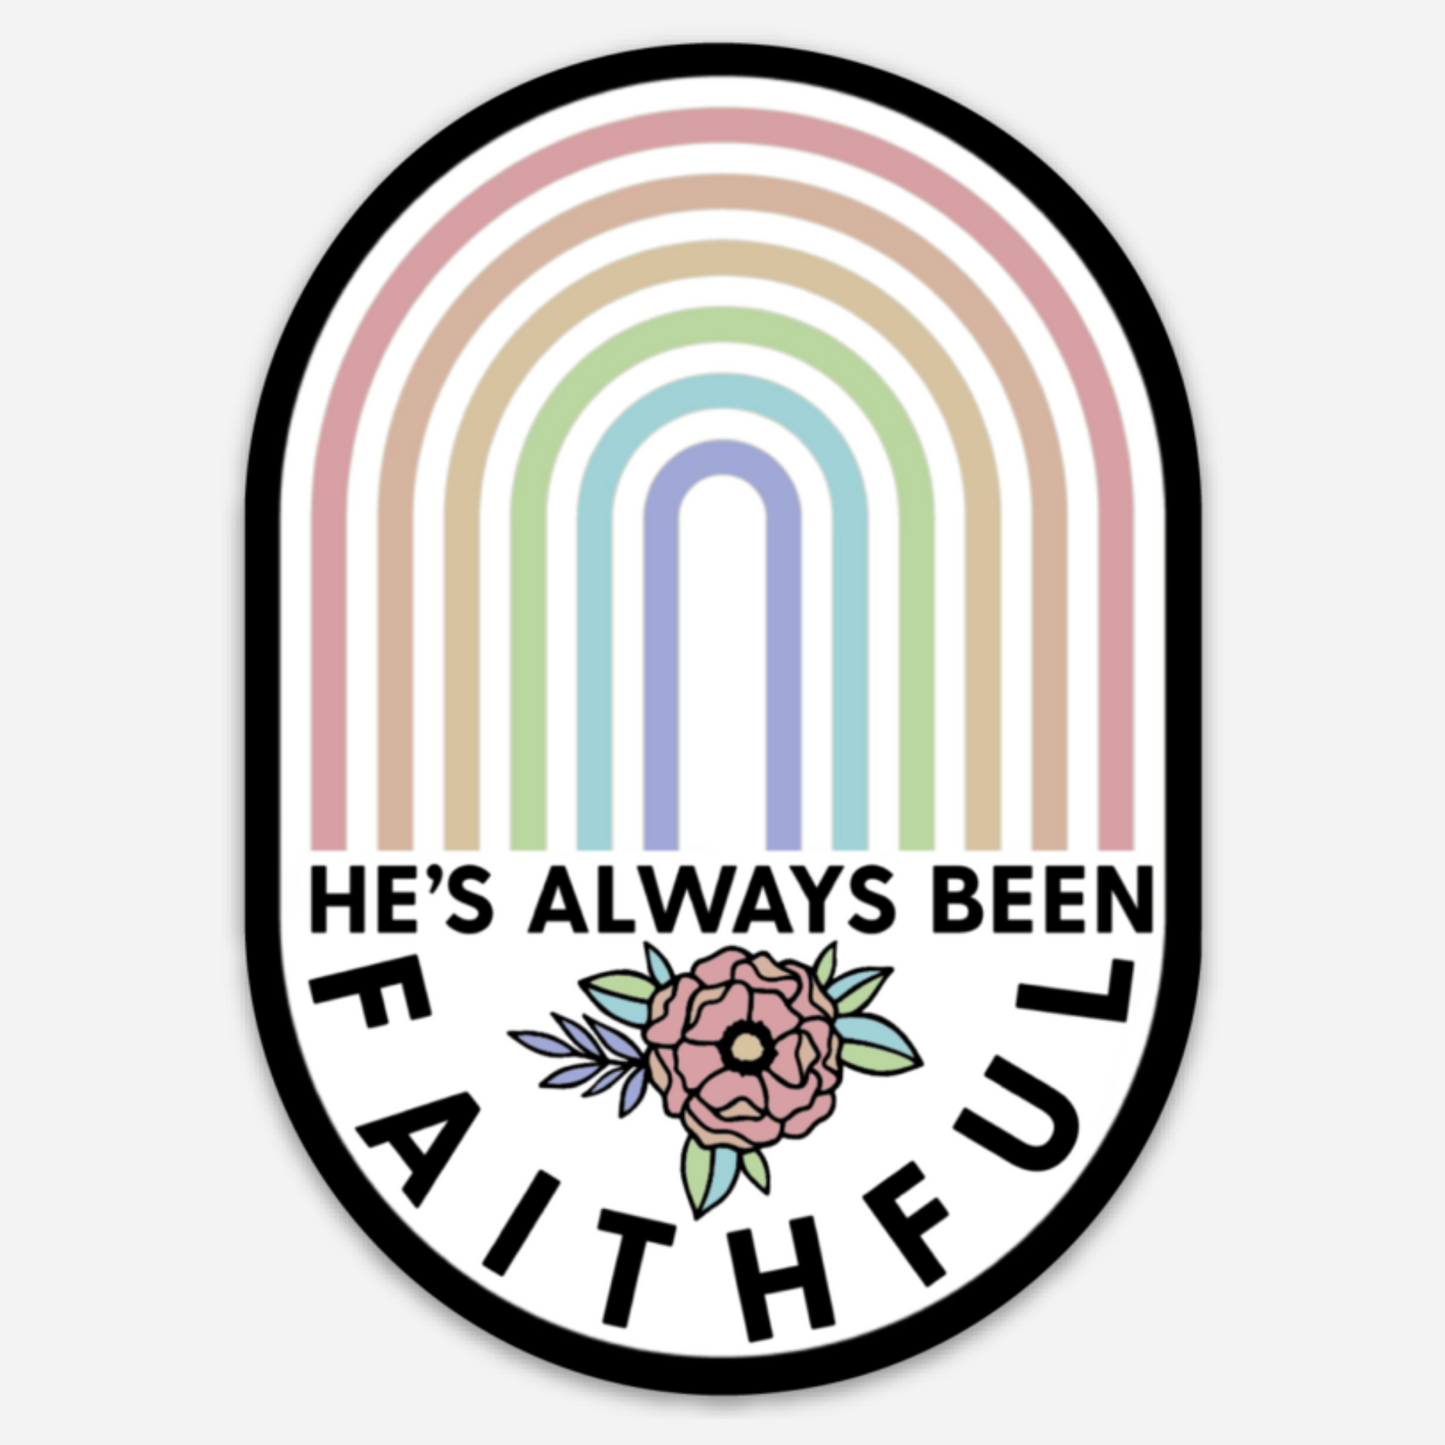 He’s always been faithful | Magnet